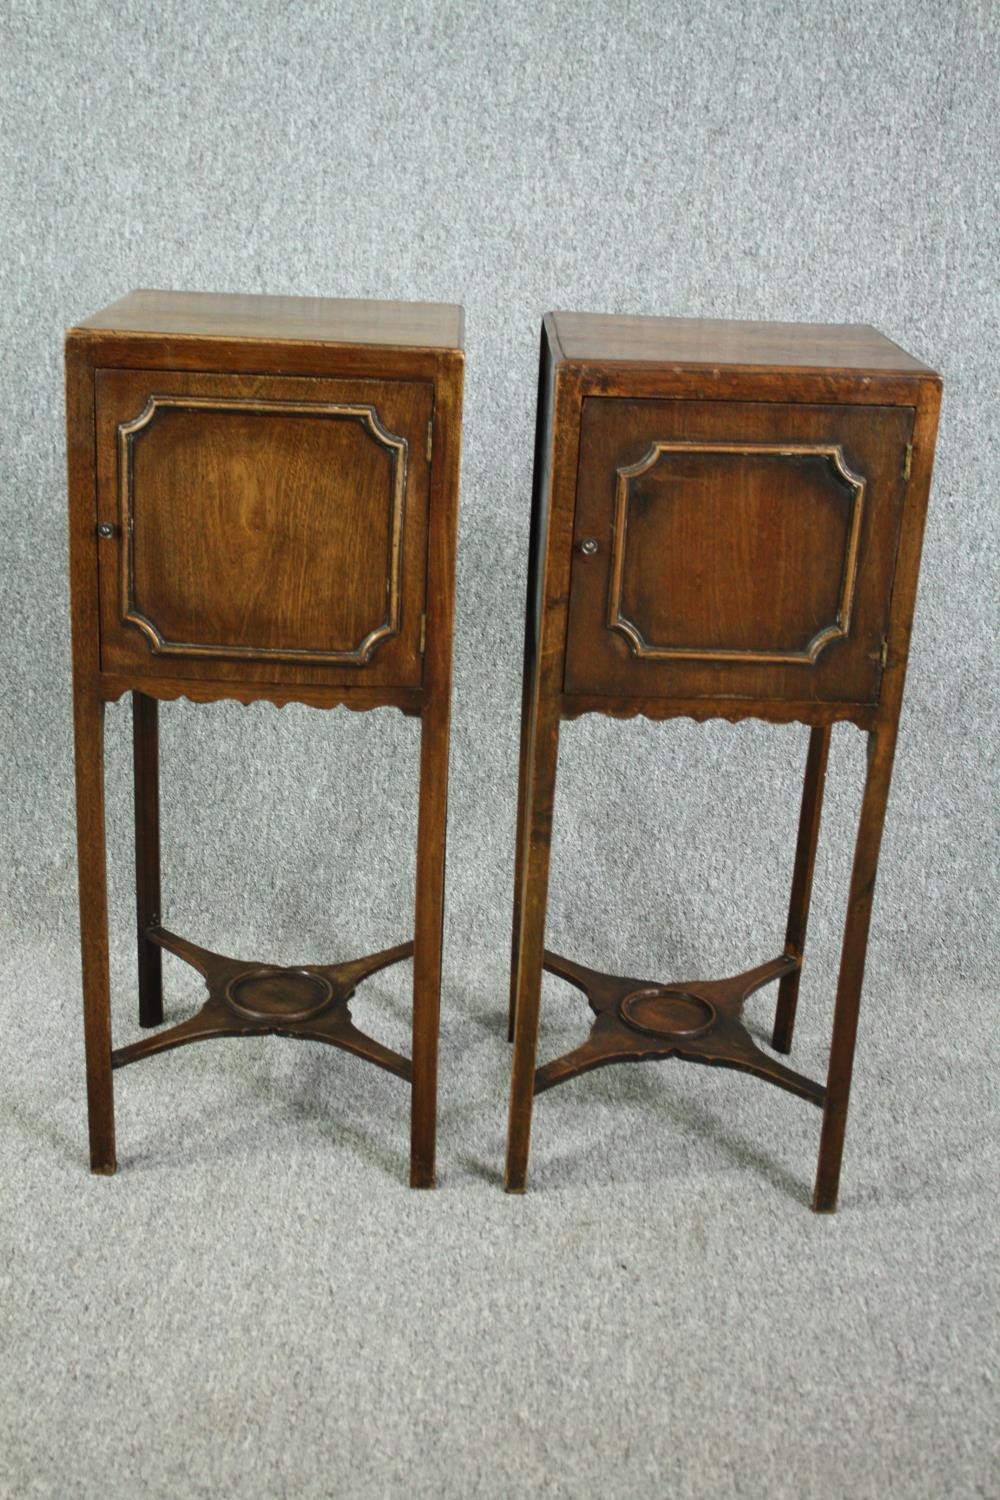 Pot cupboards, a pair, 19th century mahogany. H.80 W.32 D.32cm. (each)